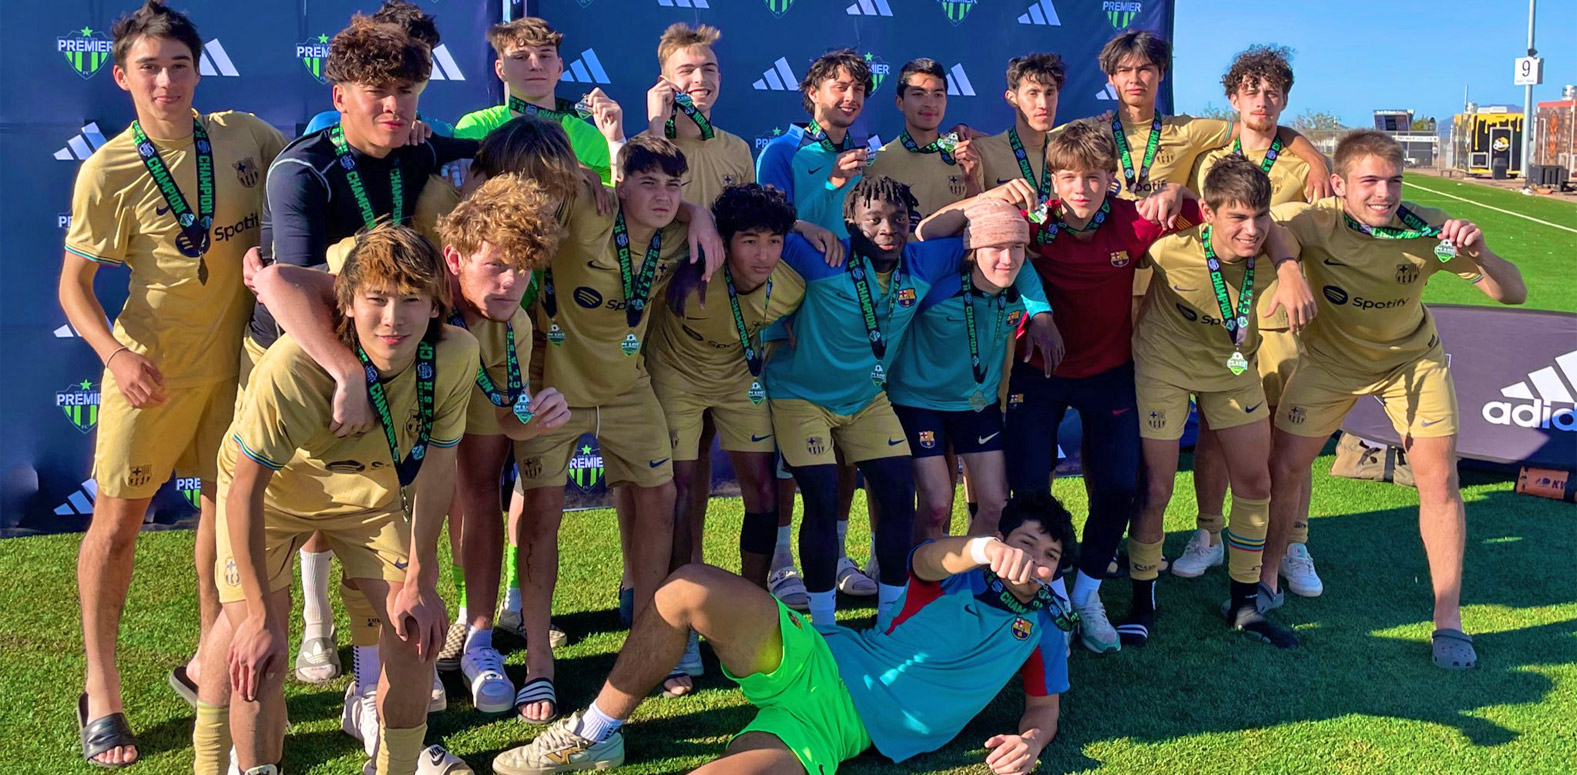 Barca Residency Academy U19 Elite Academy team celebrating after winning the Arizona Soccer Clash tournament at Legacy Sports Complex in Mesa, Arizona.